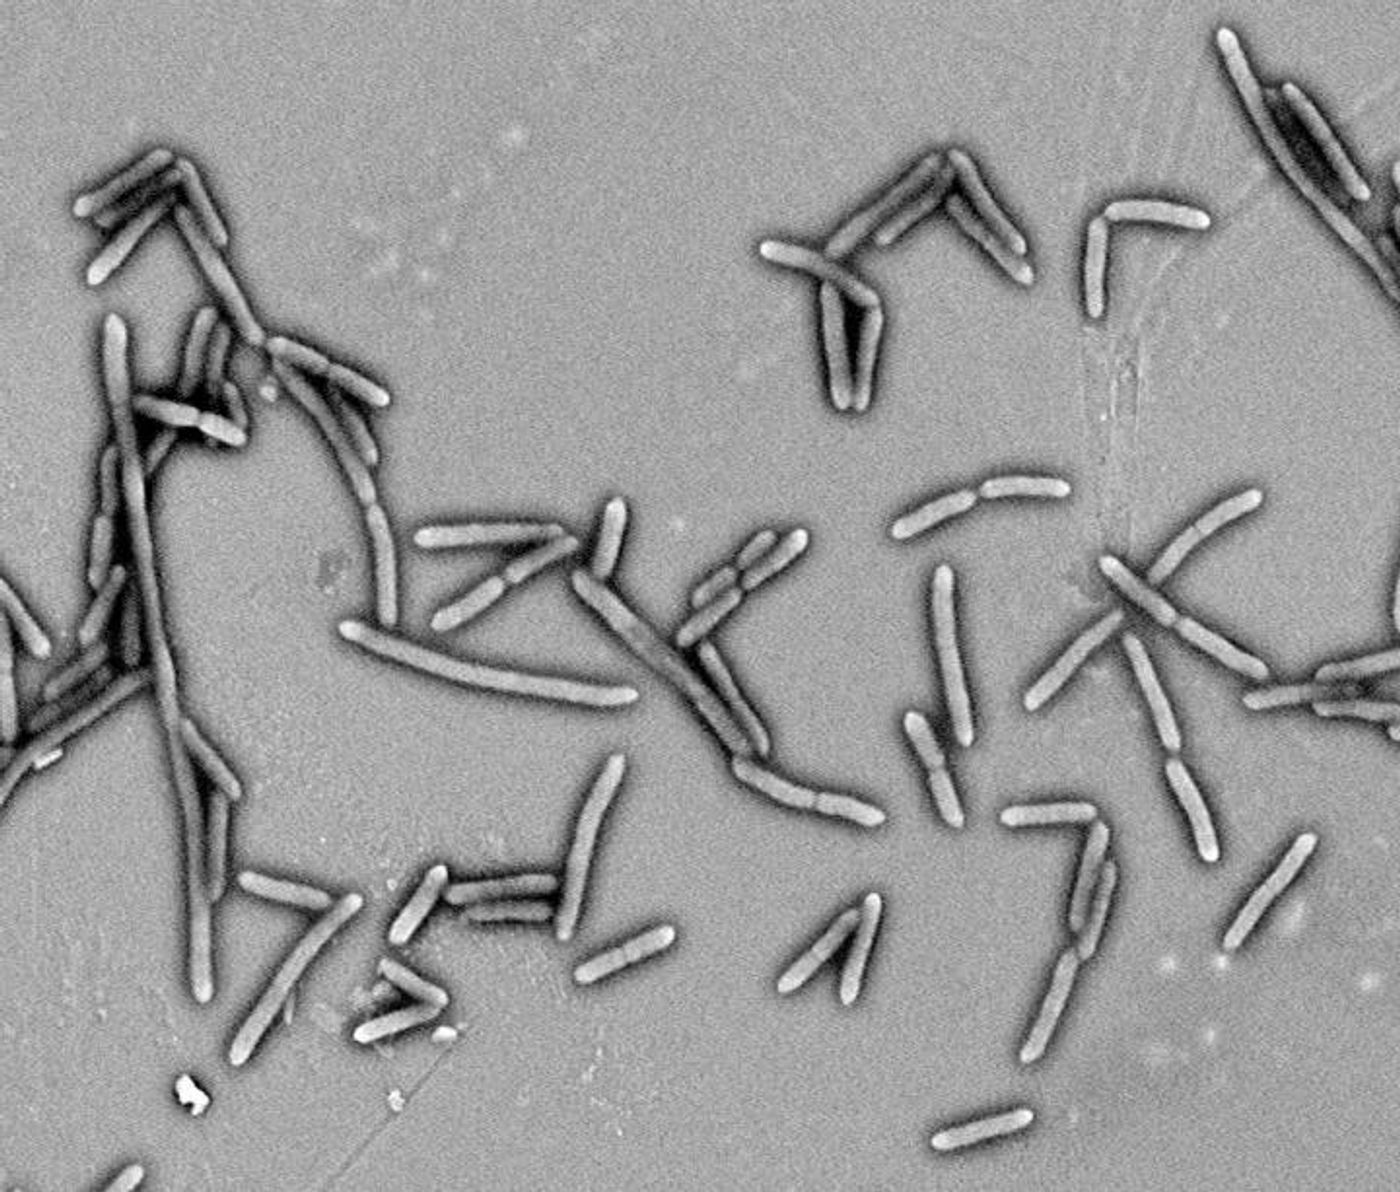 This is gut bacteria in culture. / Credit: Tao Liu and Xiaoyan Pang/Shanghai Jiao Tong University